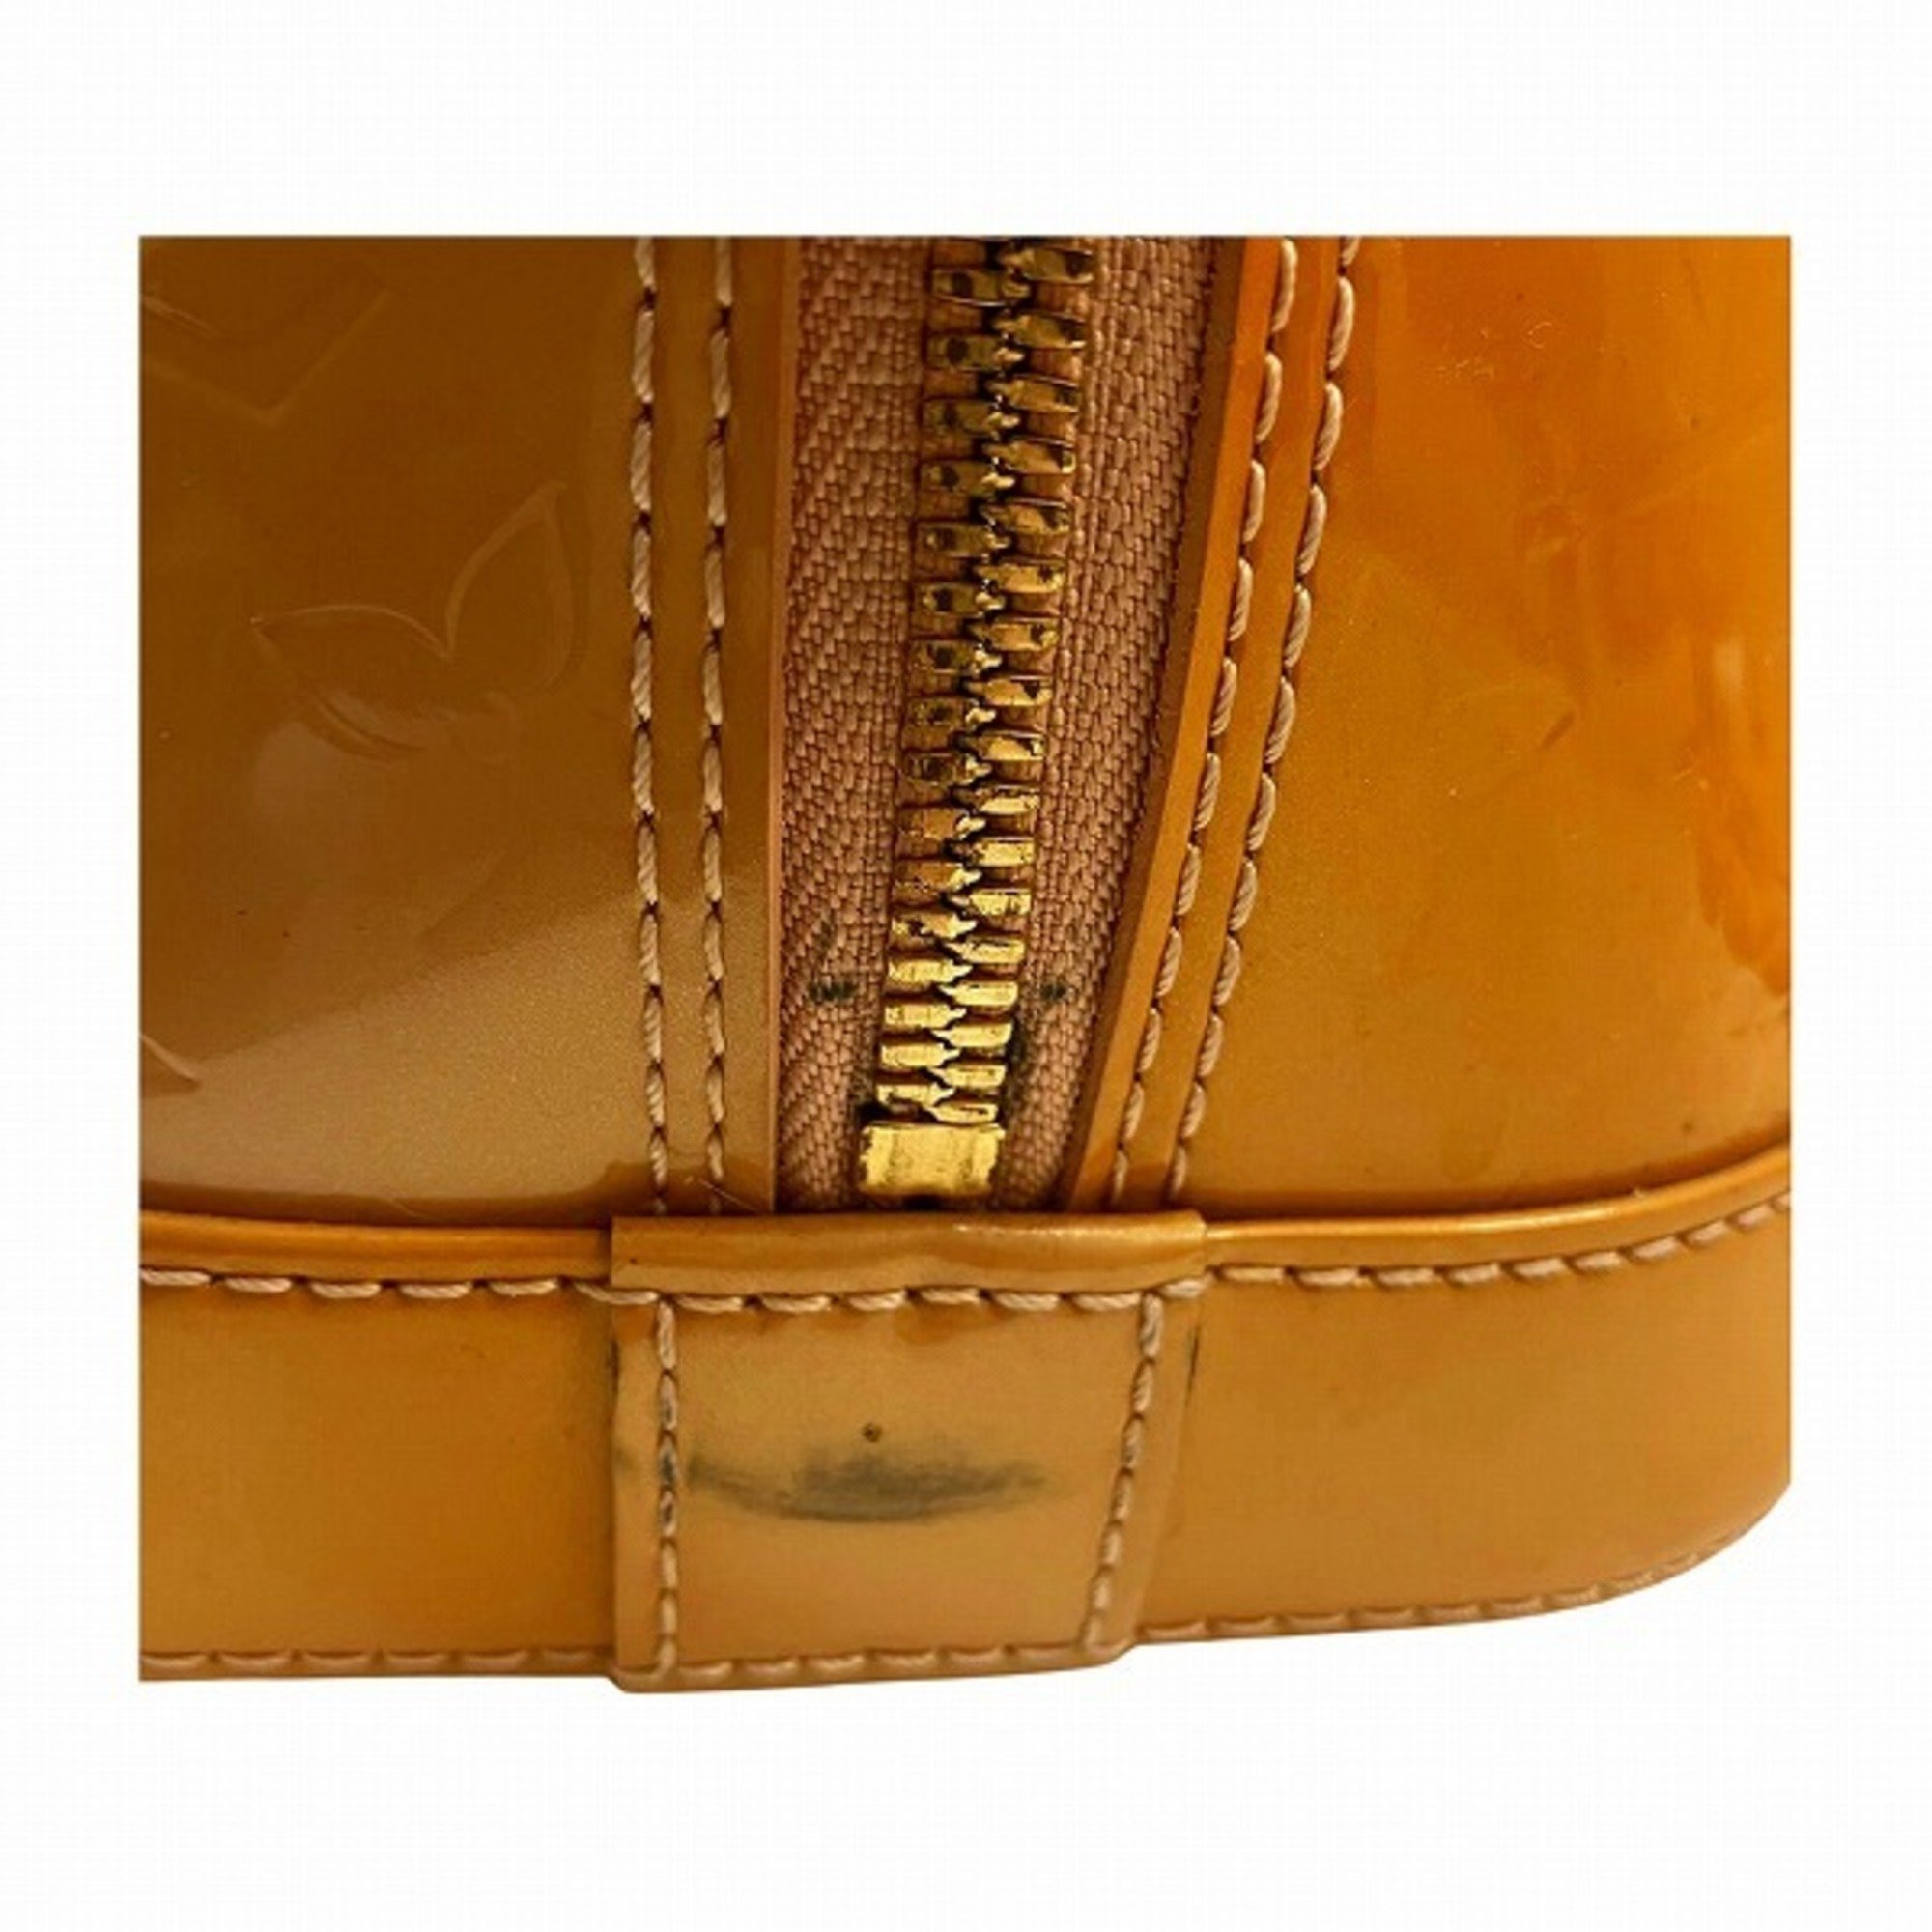 Louis Vuitton Vernis Alma M91614 Bag Handbag Ladies